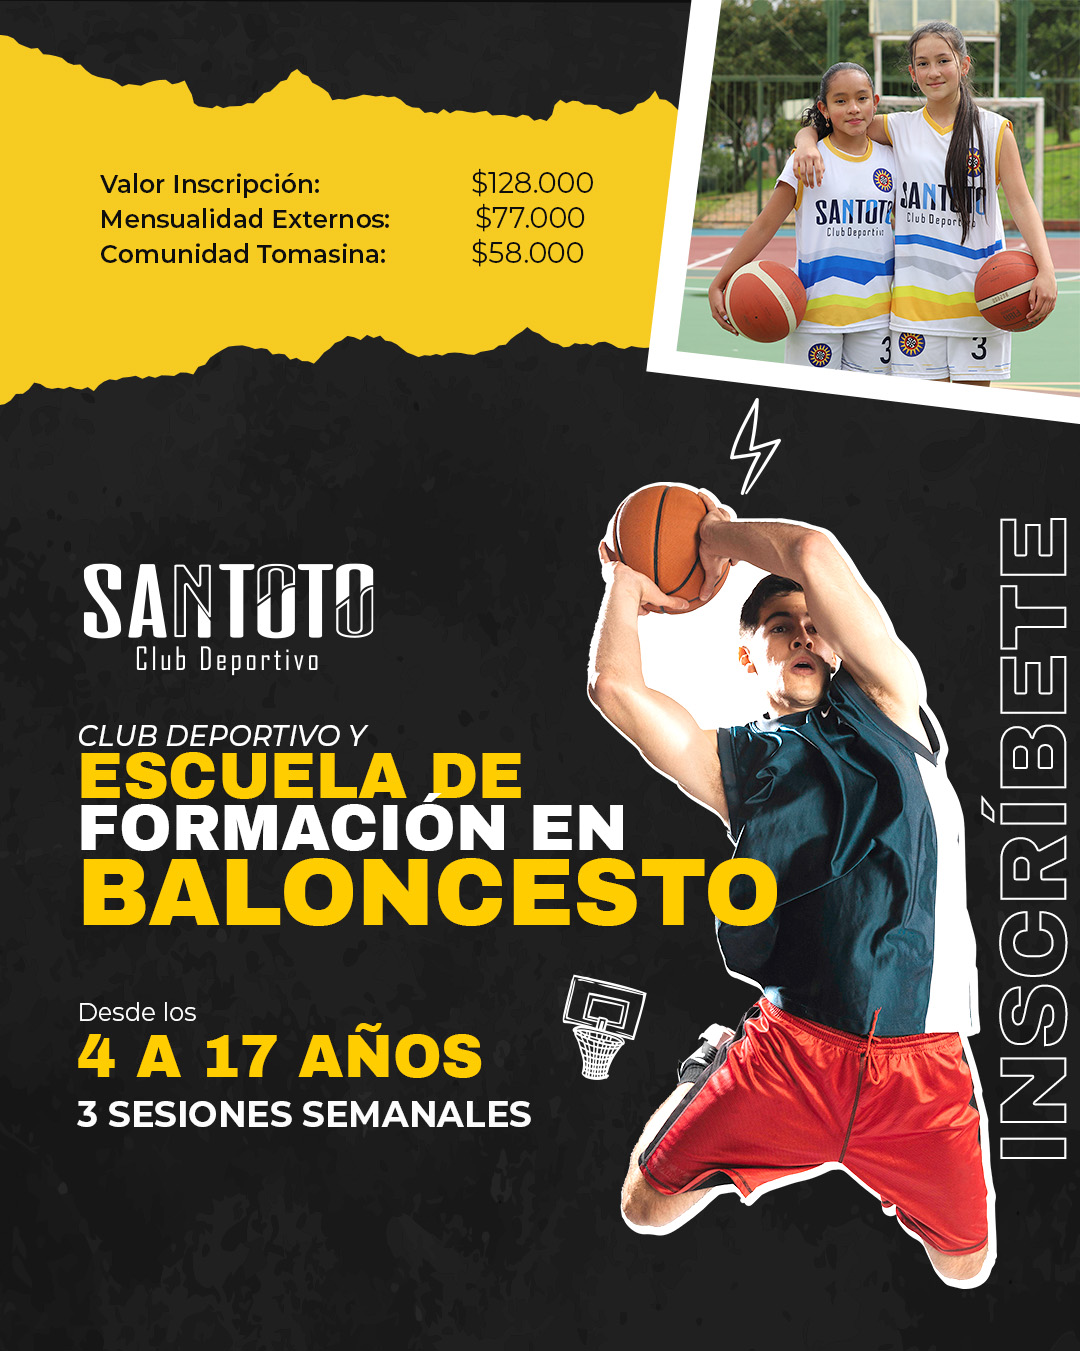 Baloncesto_Club_Deportivo_Santoto_2